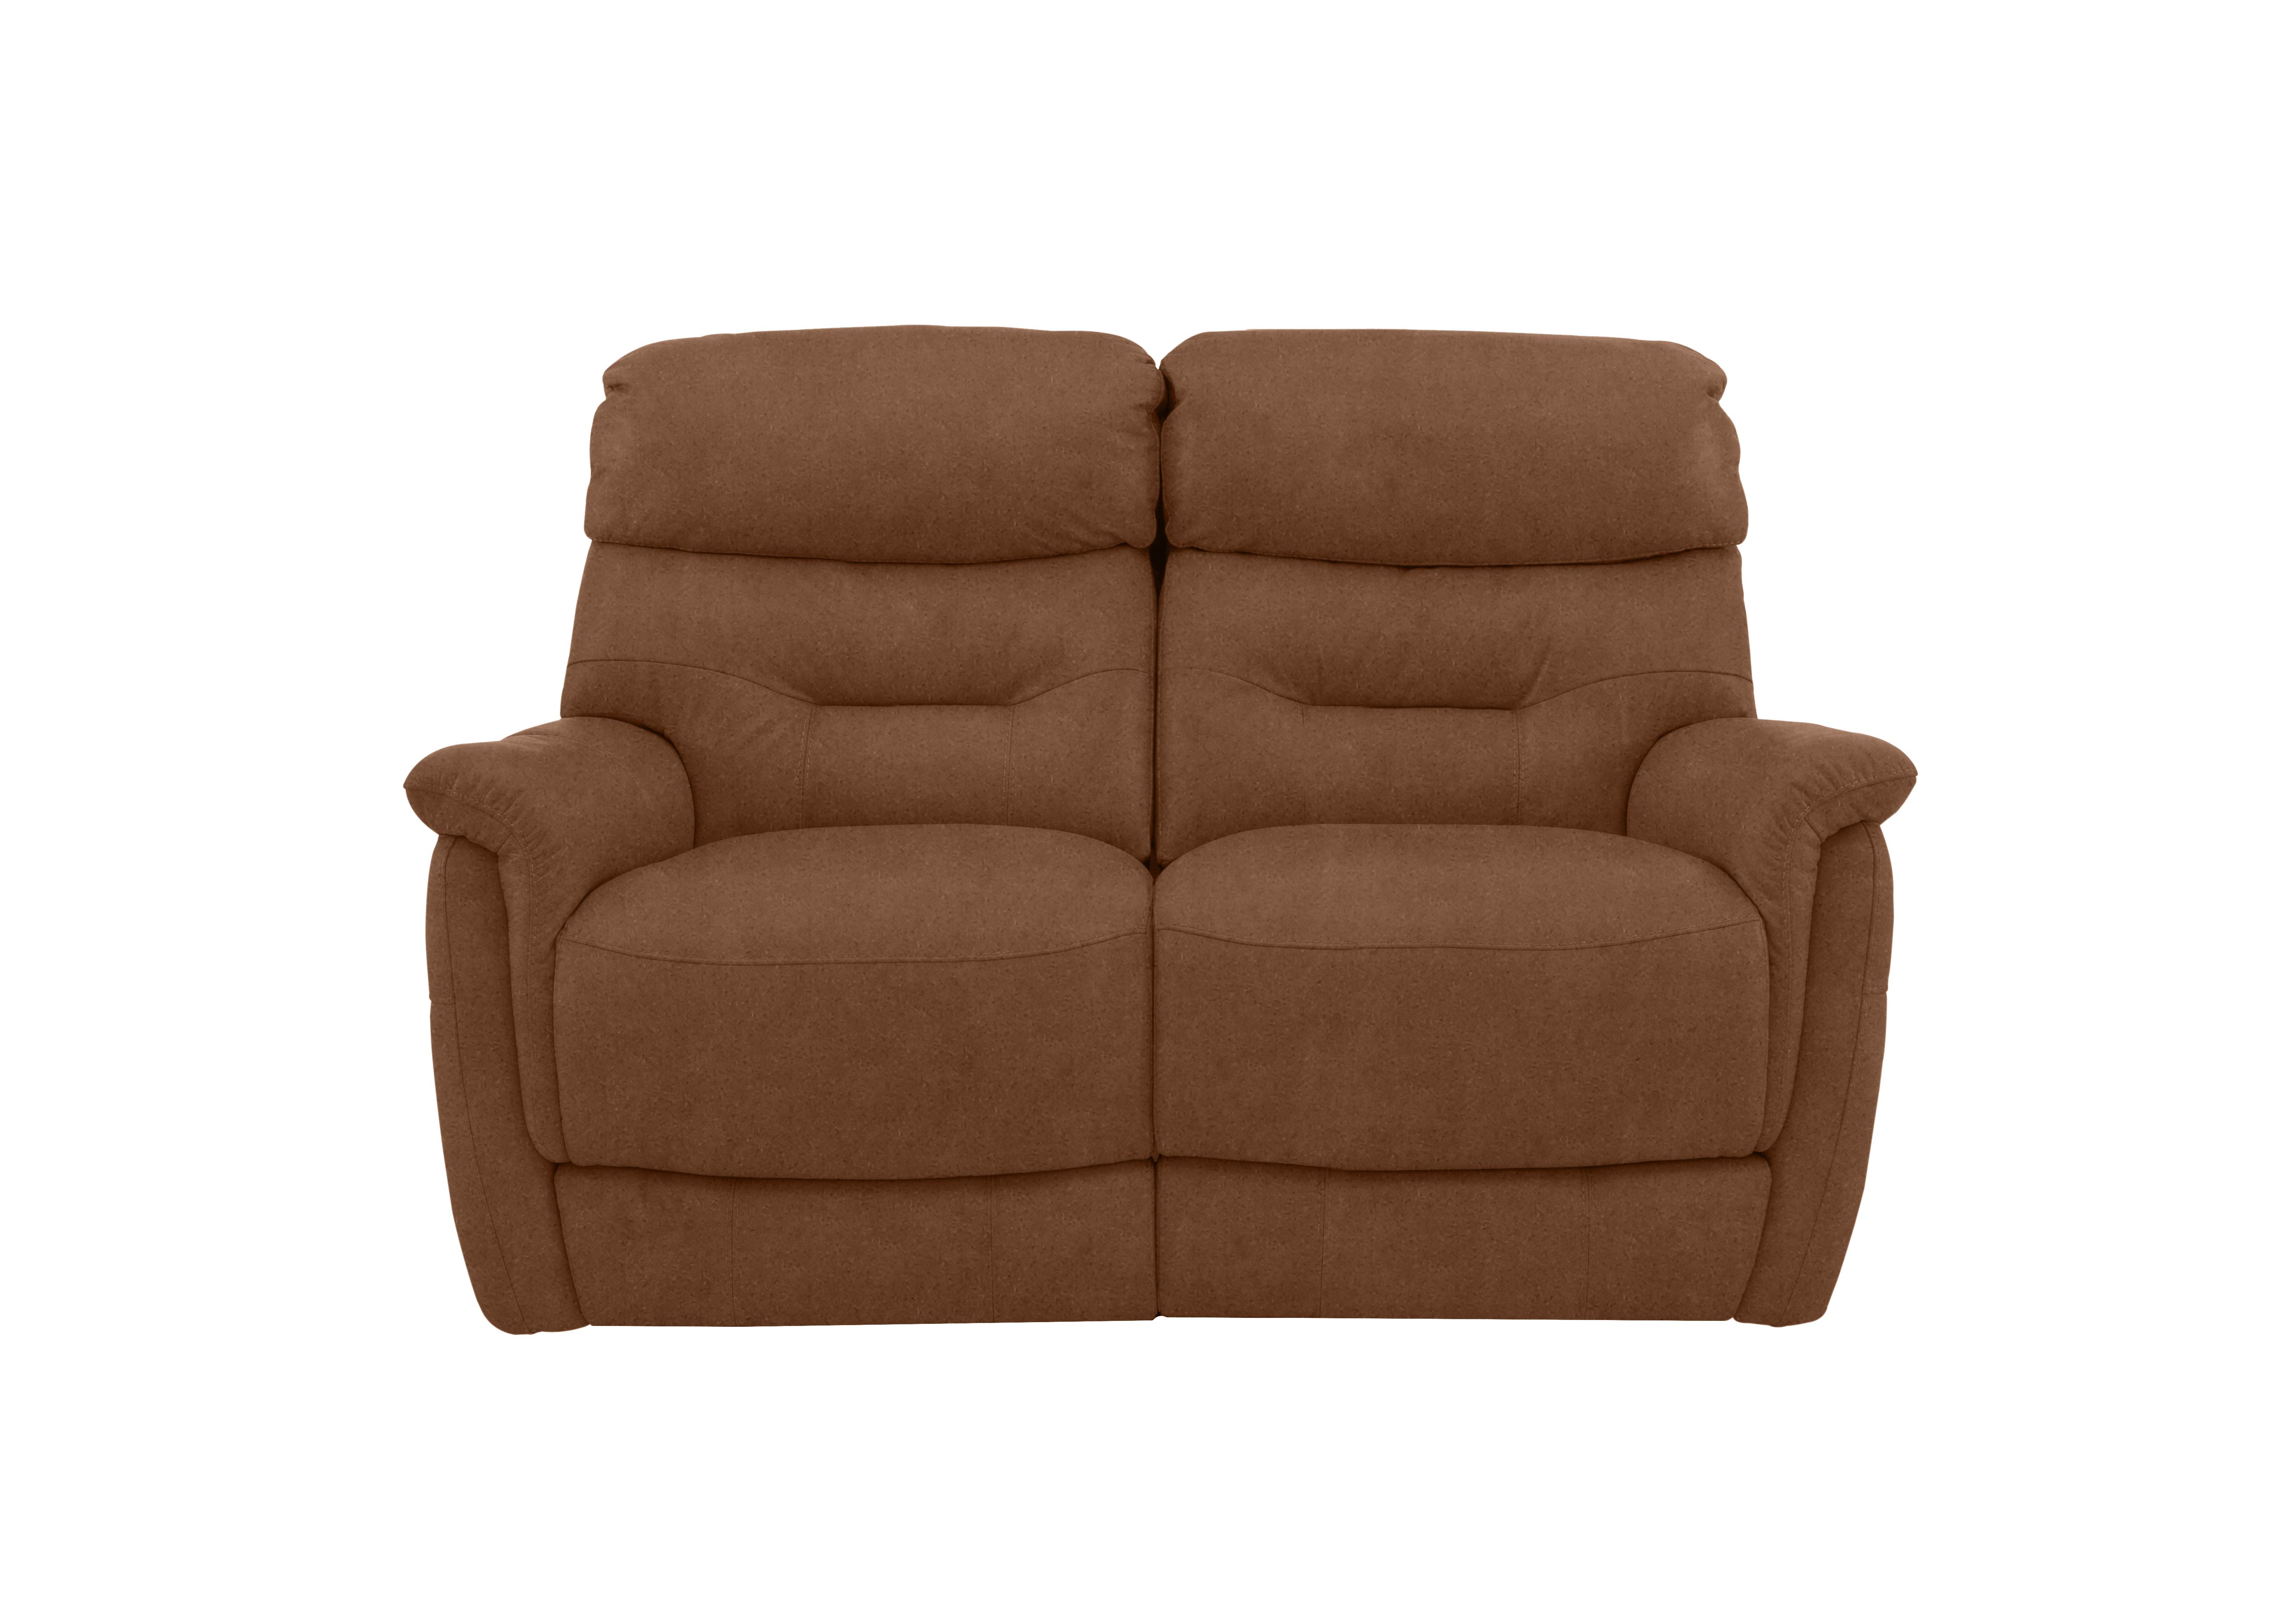 Chicago 2 Seater Fabric Sofa in Bfa-Blj-R05 Hazelnut on Furniture Village